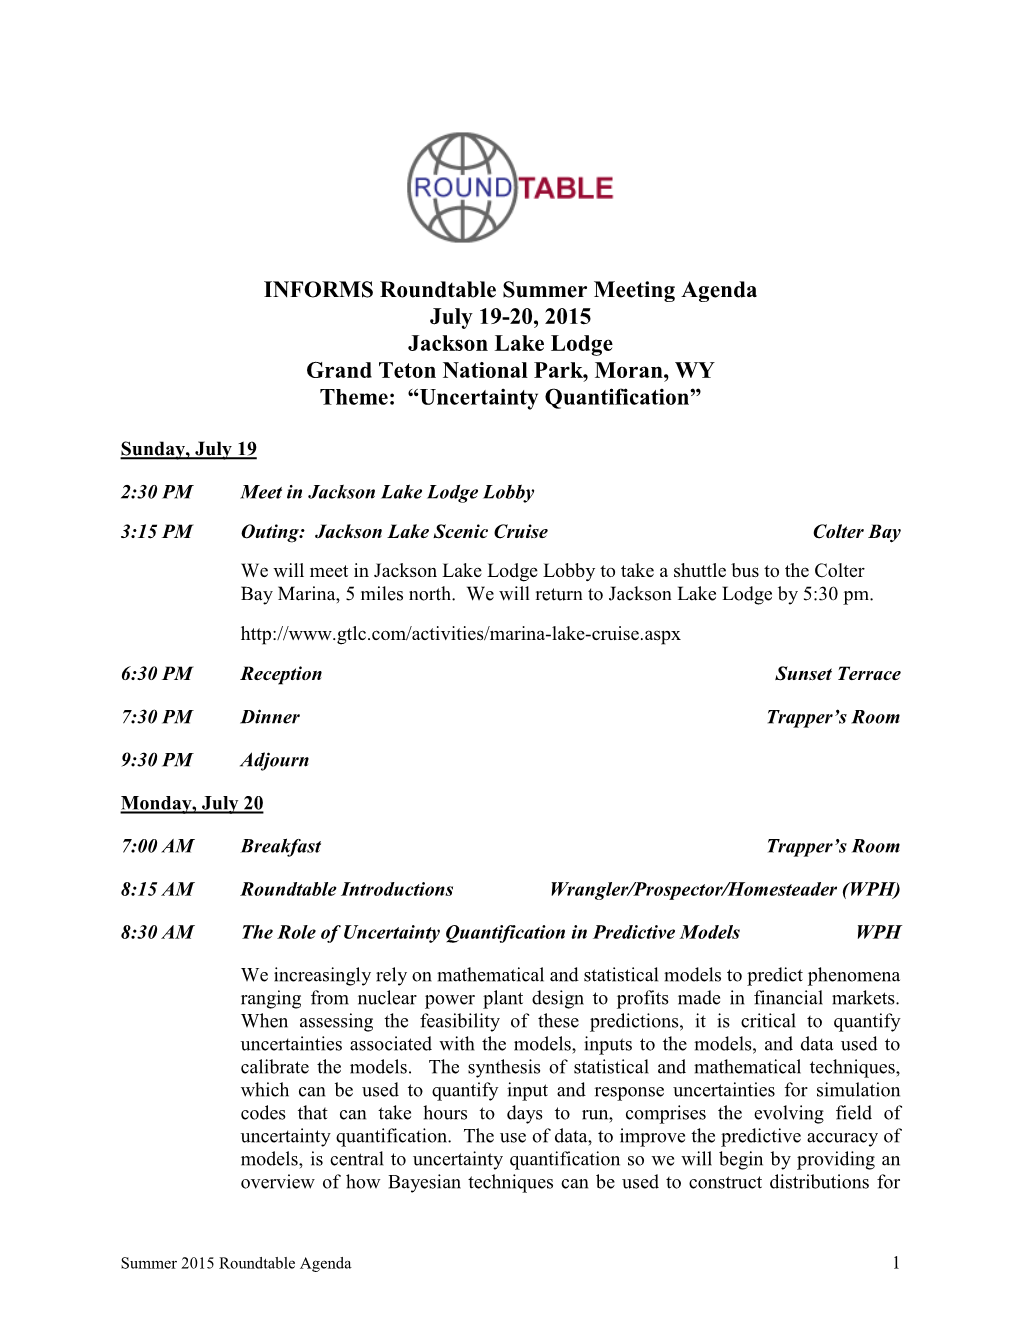 INFORMS Roundtable Summer Meeting Agenda July 19-20, 2015 Jackson Lake Lodge Grand Teton National Park, Moran, WY Theme: “Uncertainty Quantification”